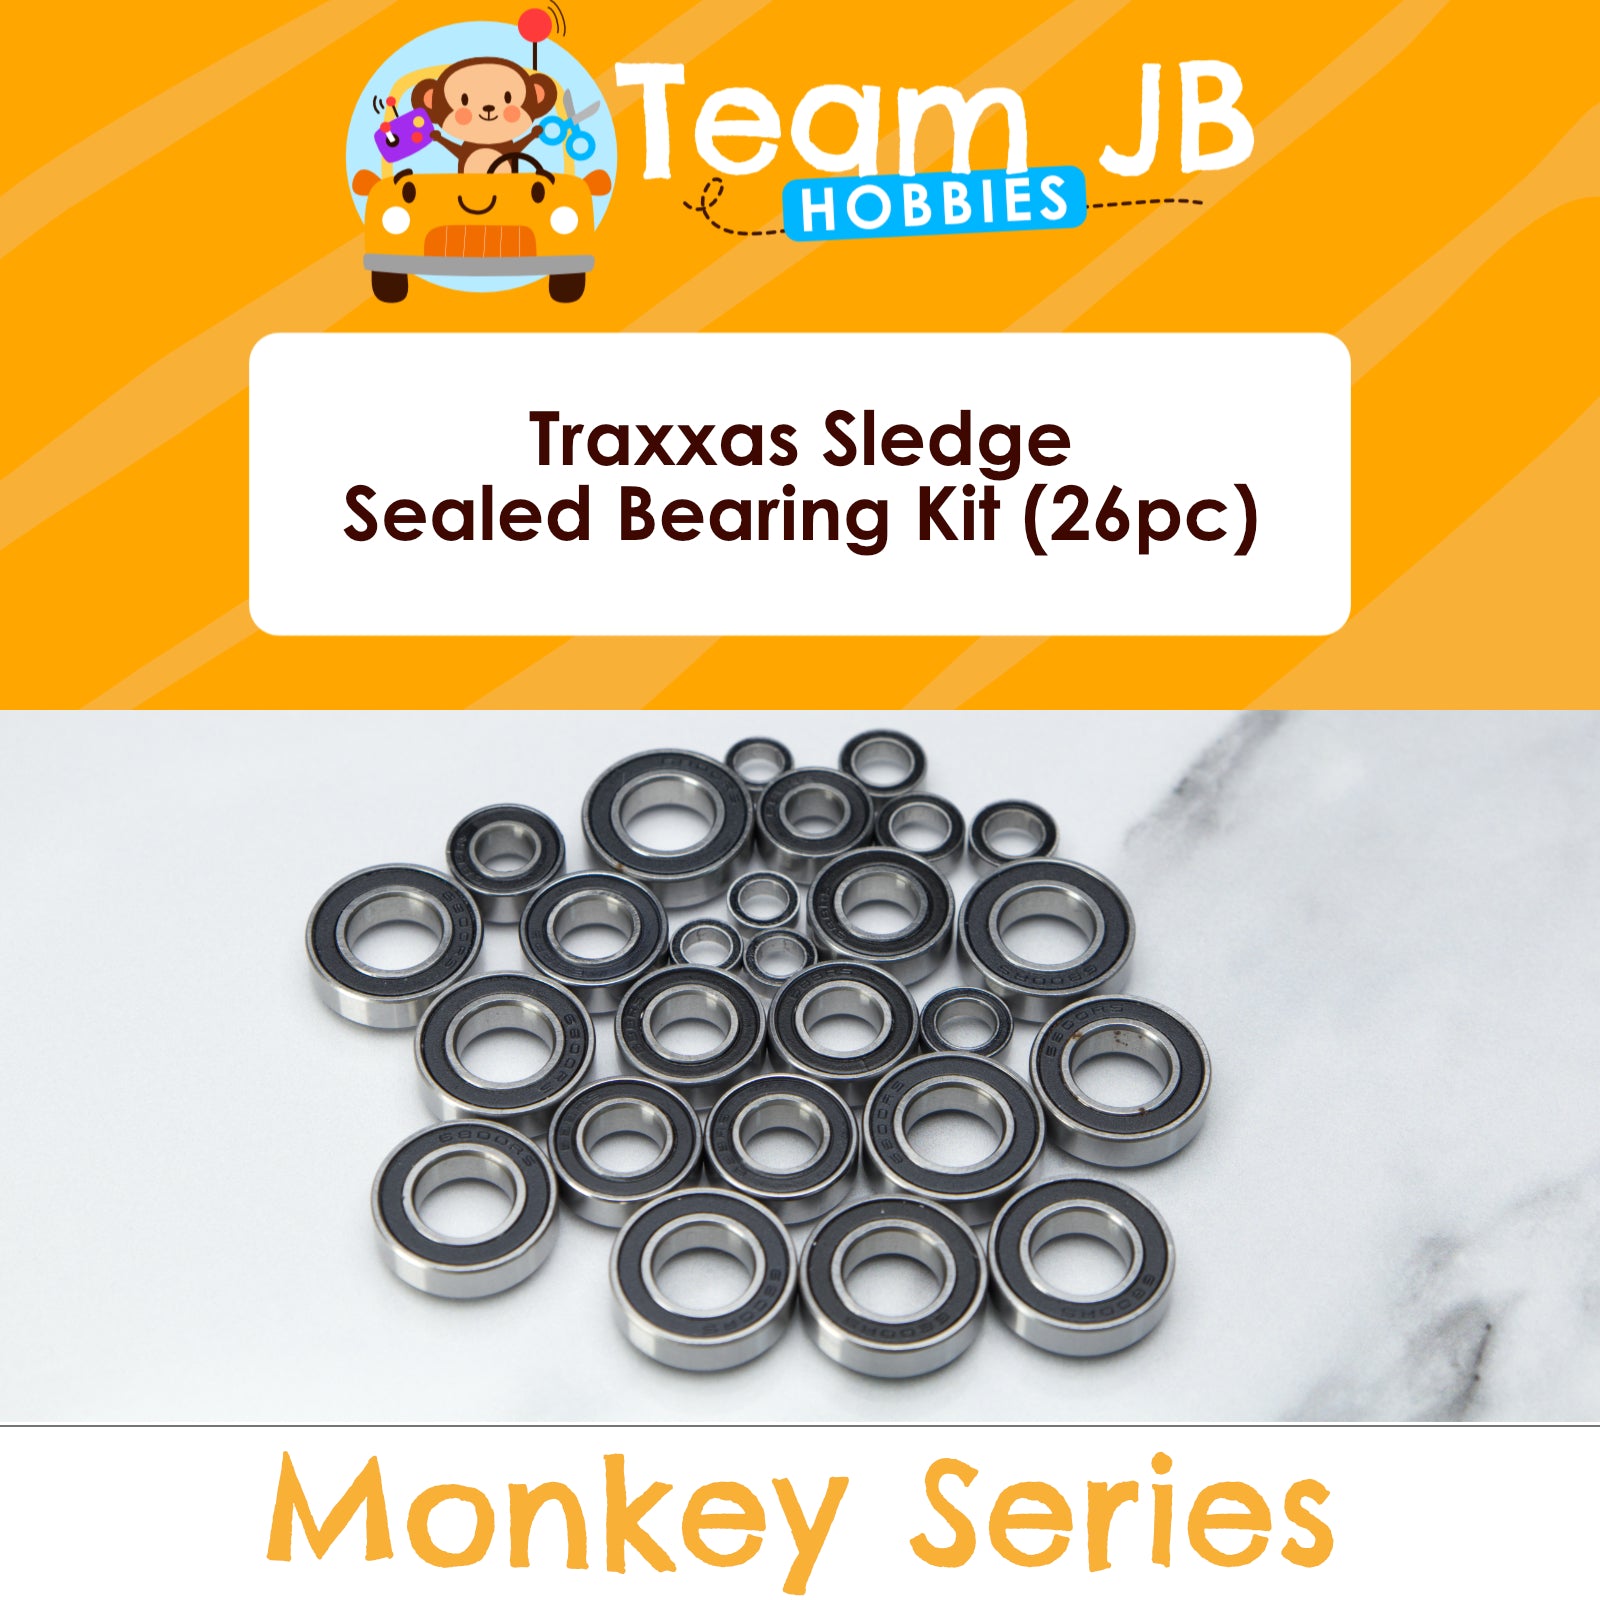 Traxxas Sledge - Sealed Bearing Kit